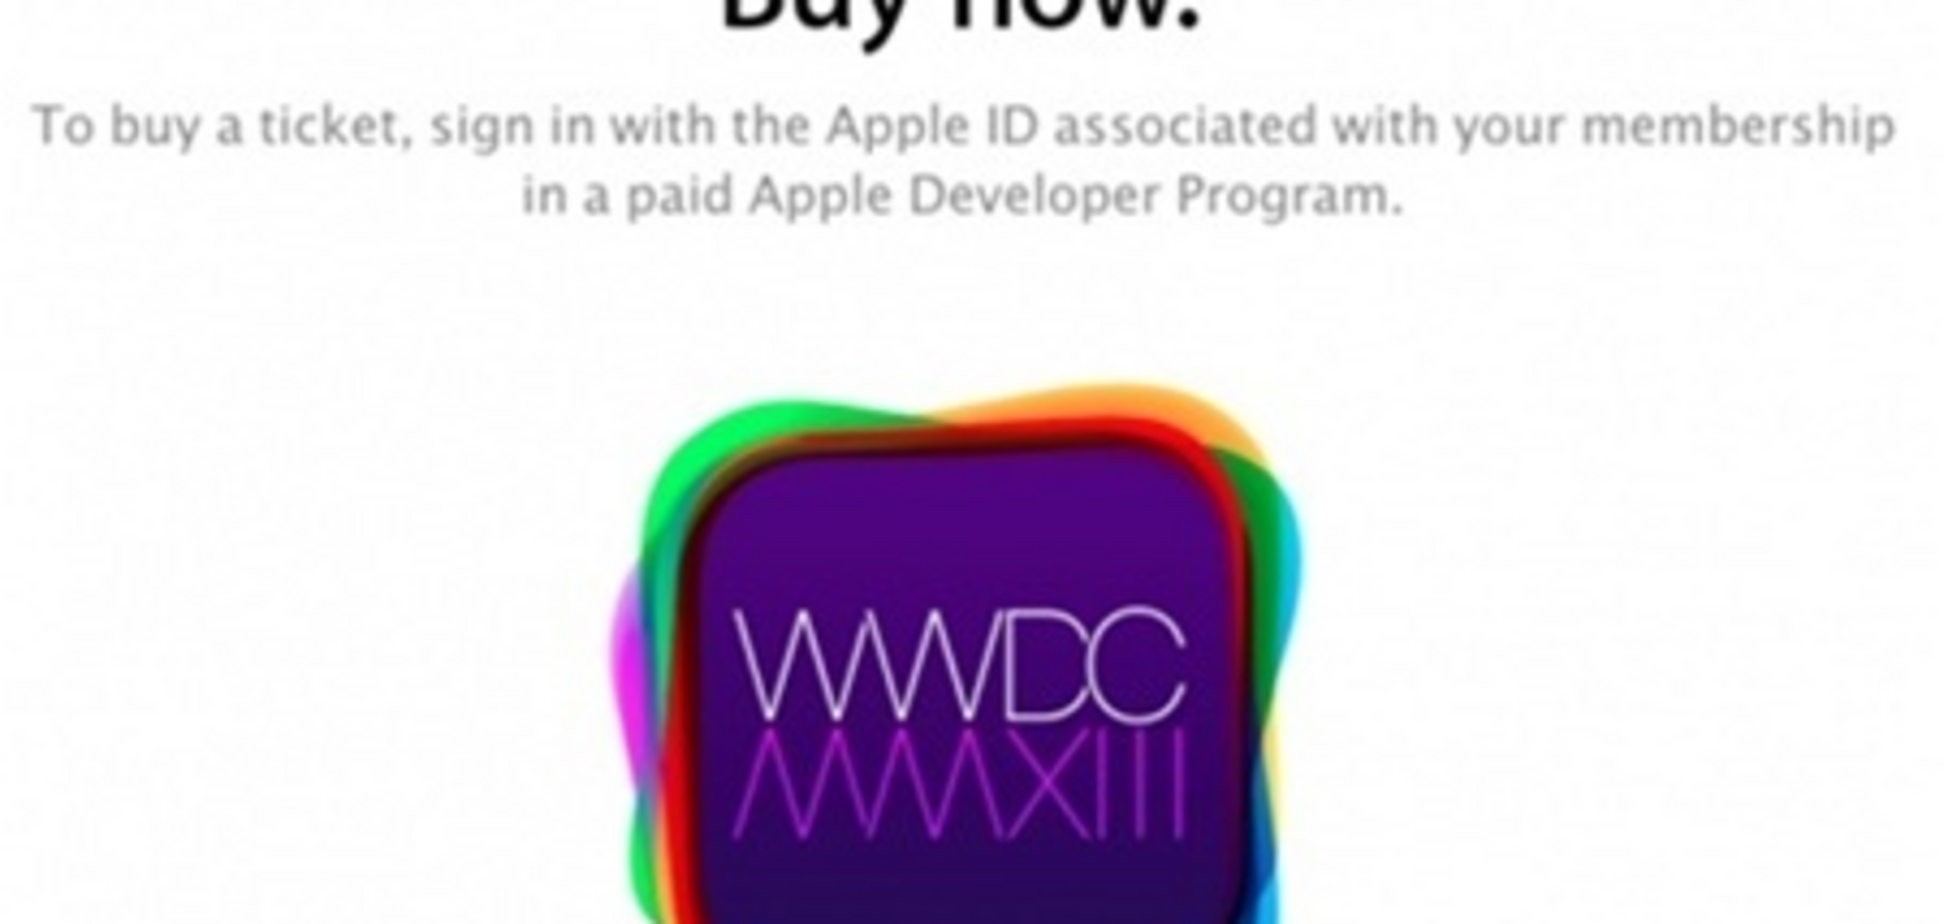 Билеты на Apple WWDC 2013 продали за две минуты